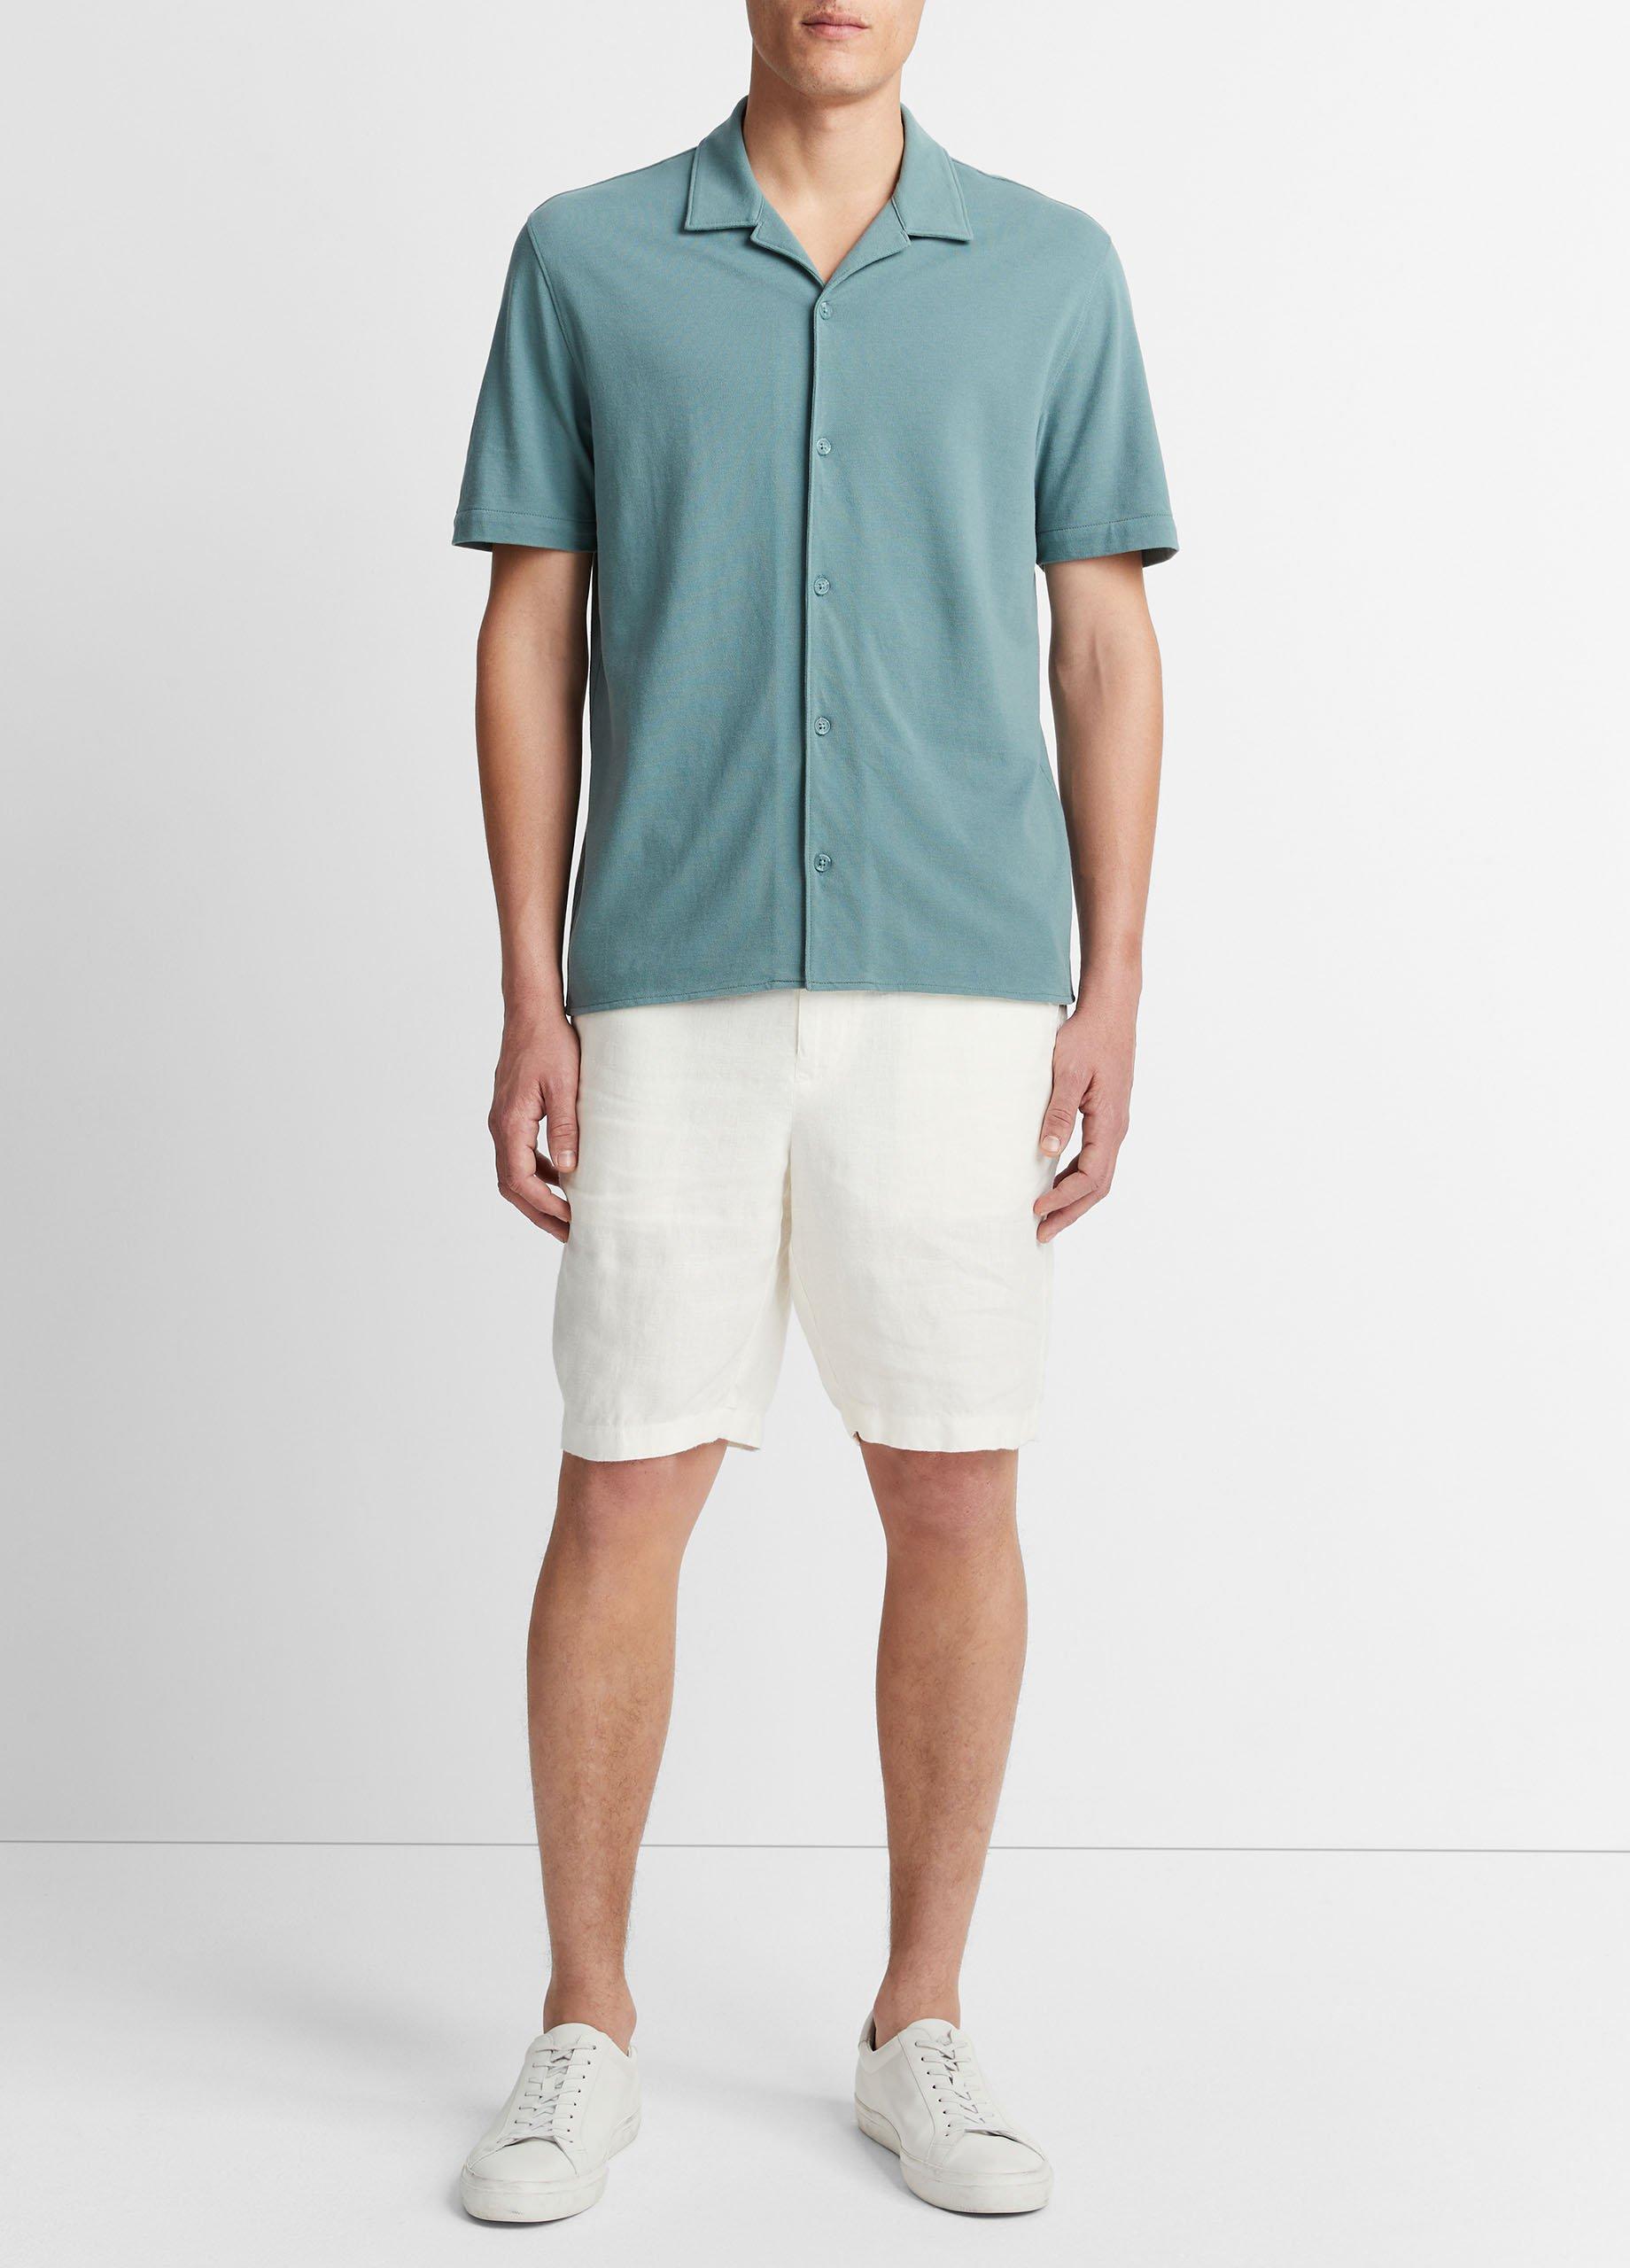 Cotton Piqué Cabana Shirt, Mirage Teal, Size S Vince